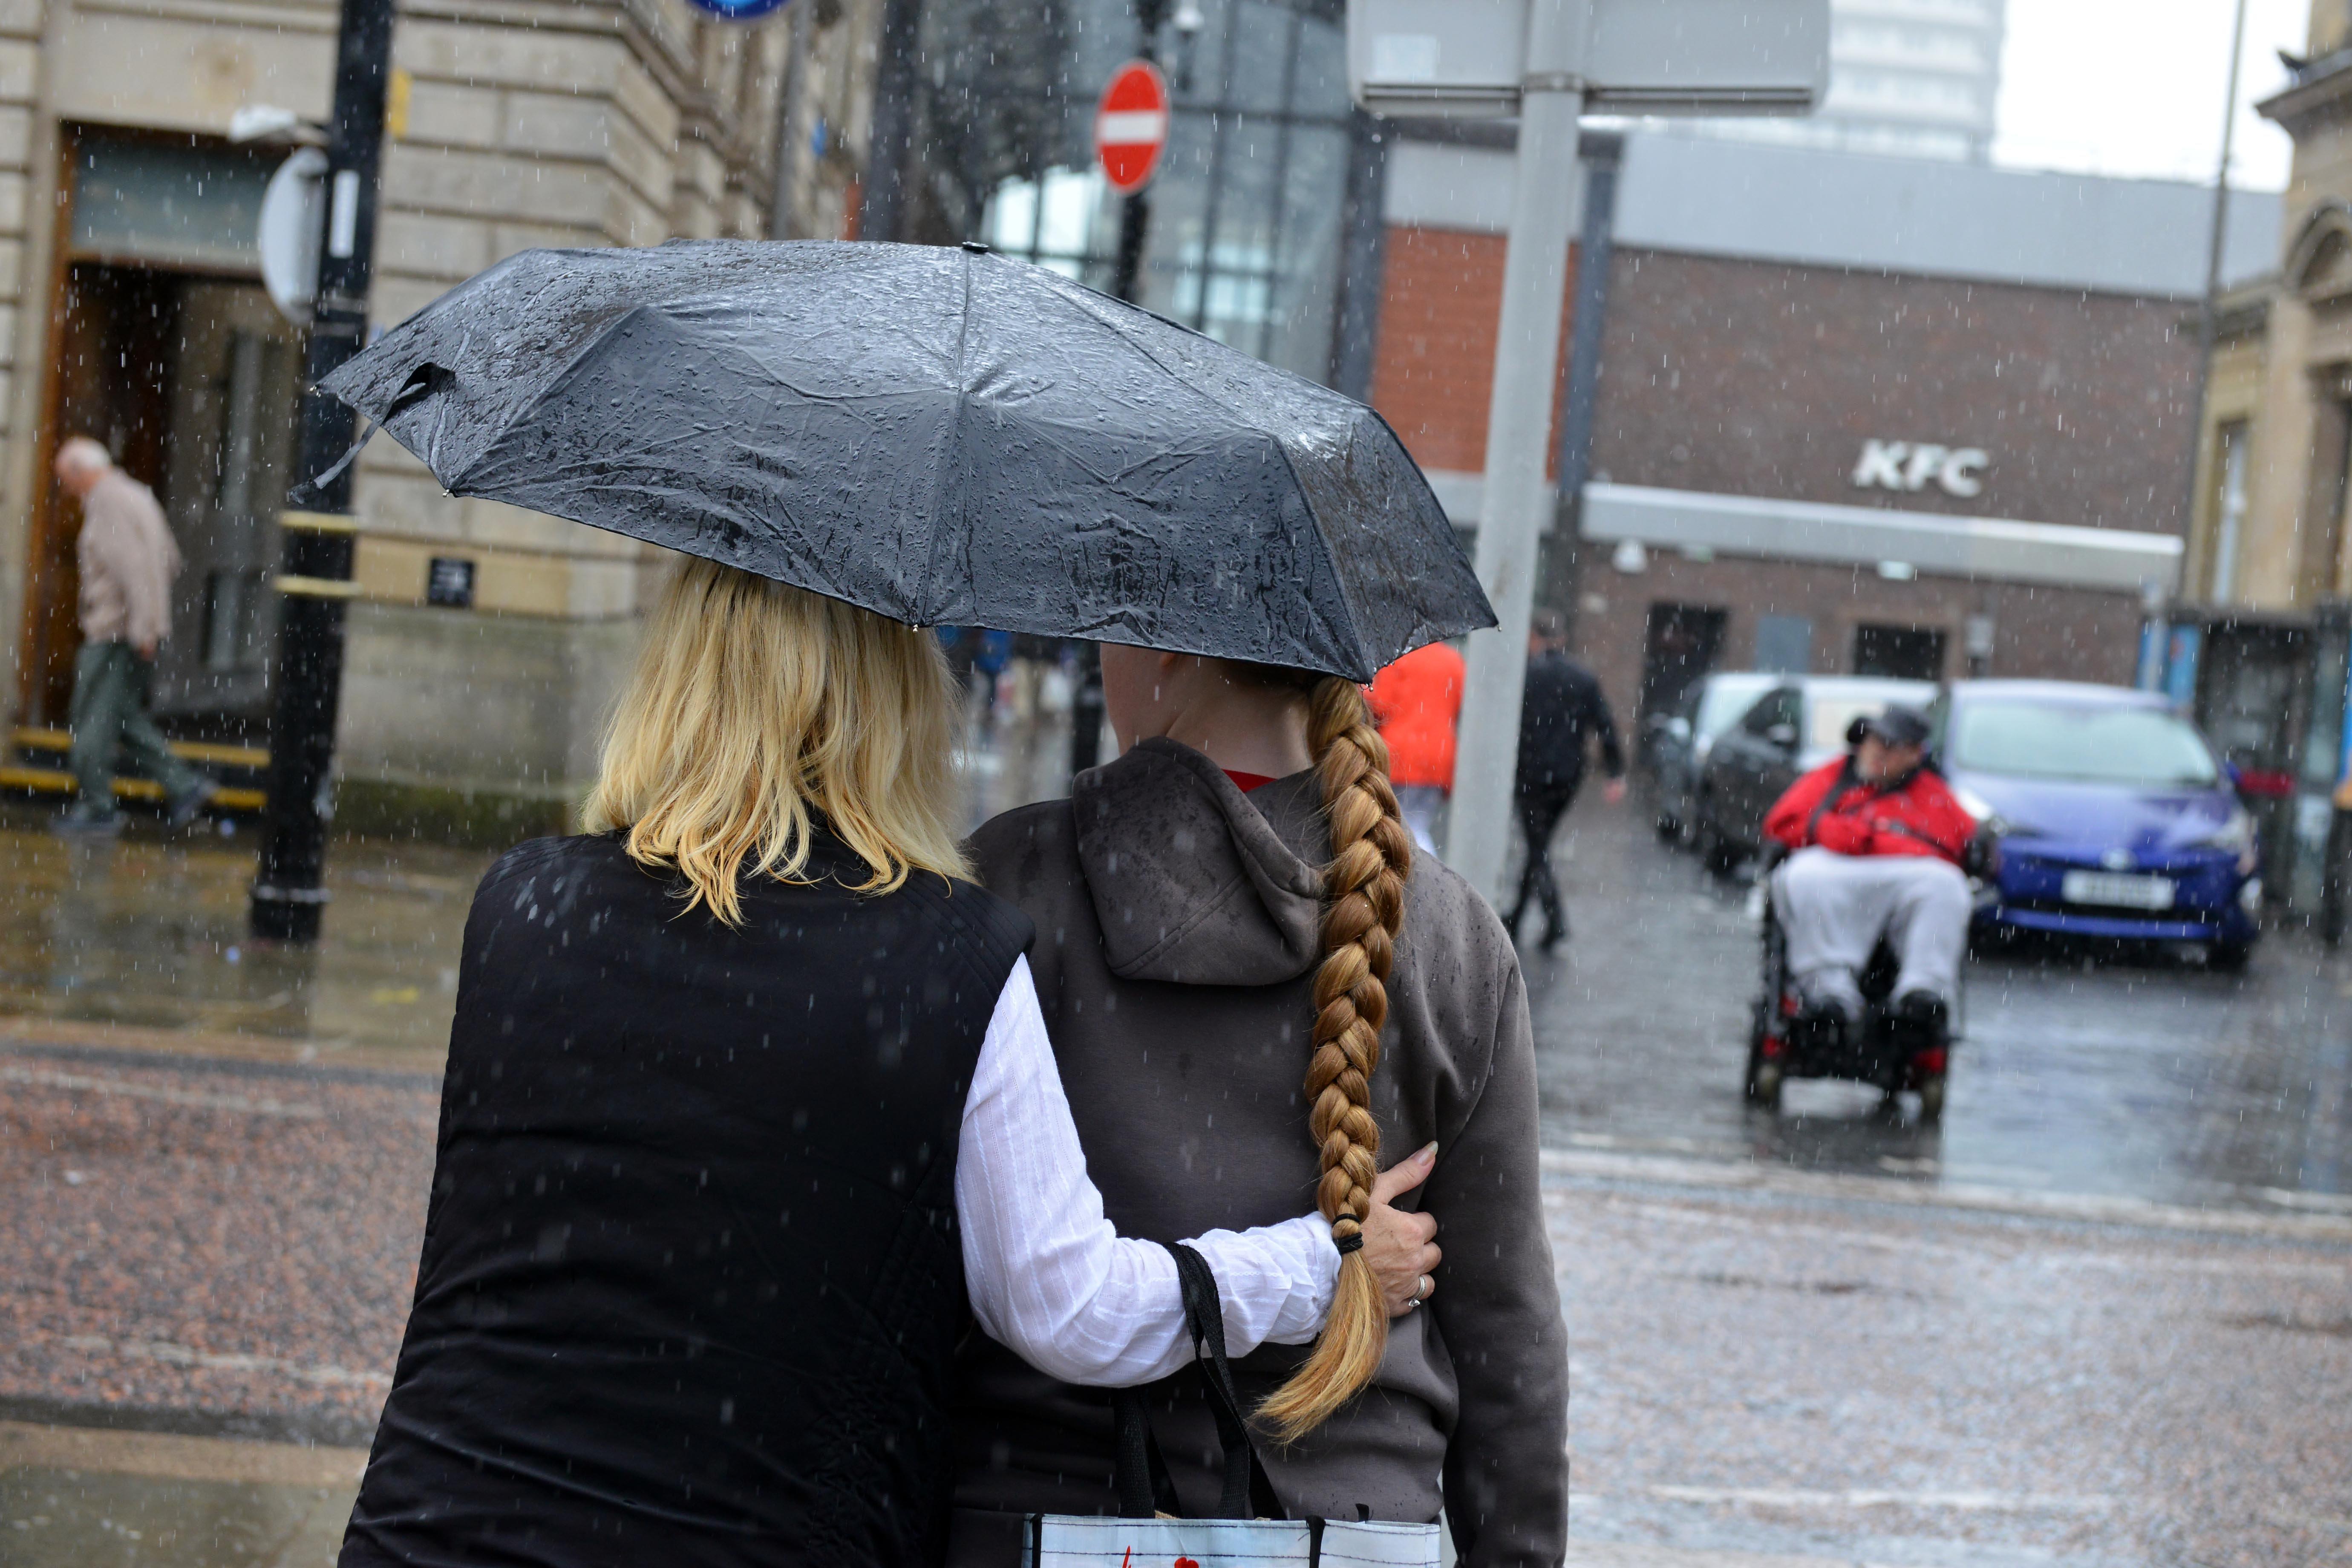 Sunderland weather forecast: This is when rain is predicted - Sunderland Echo